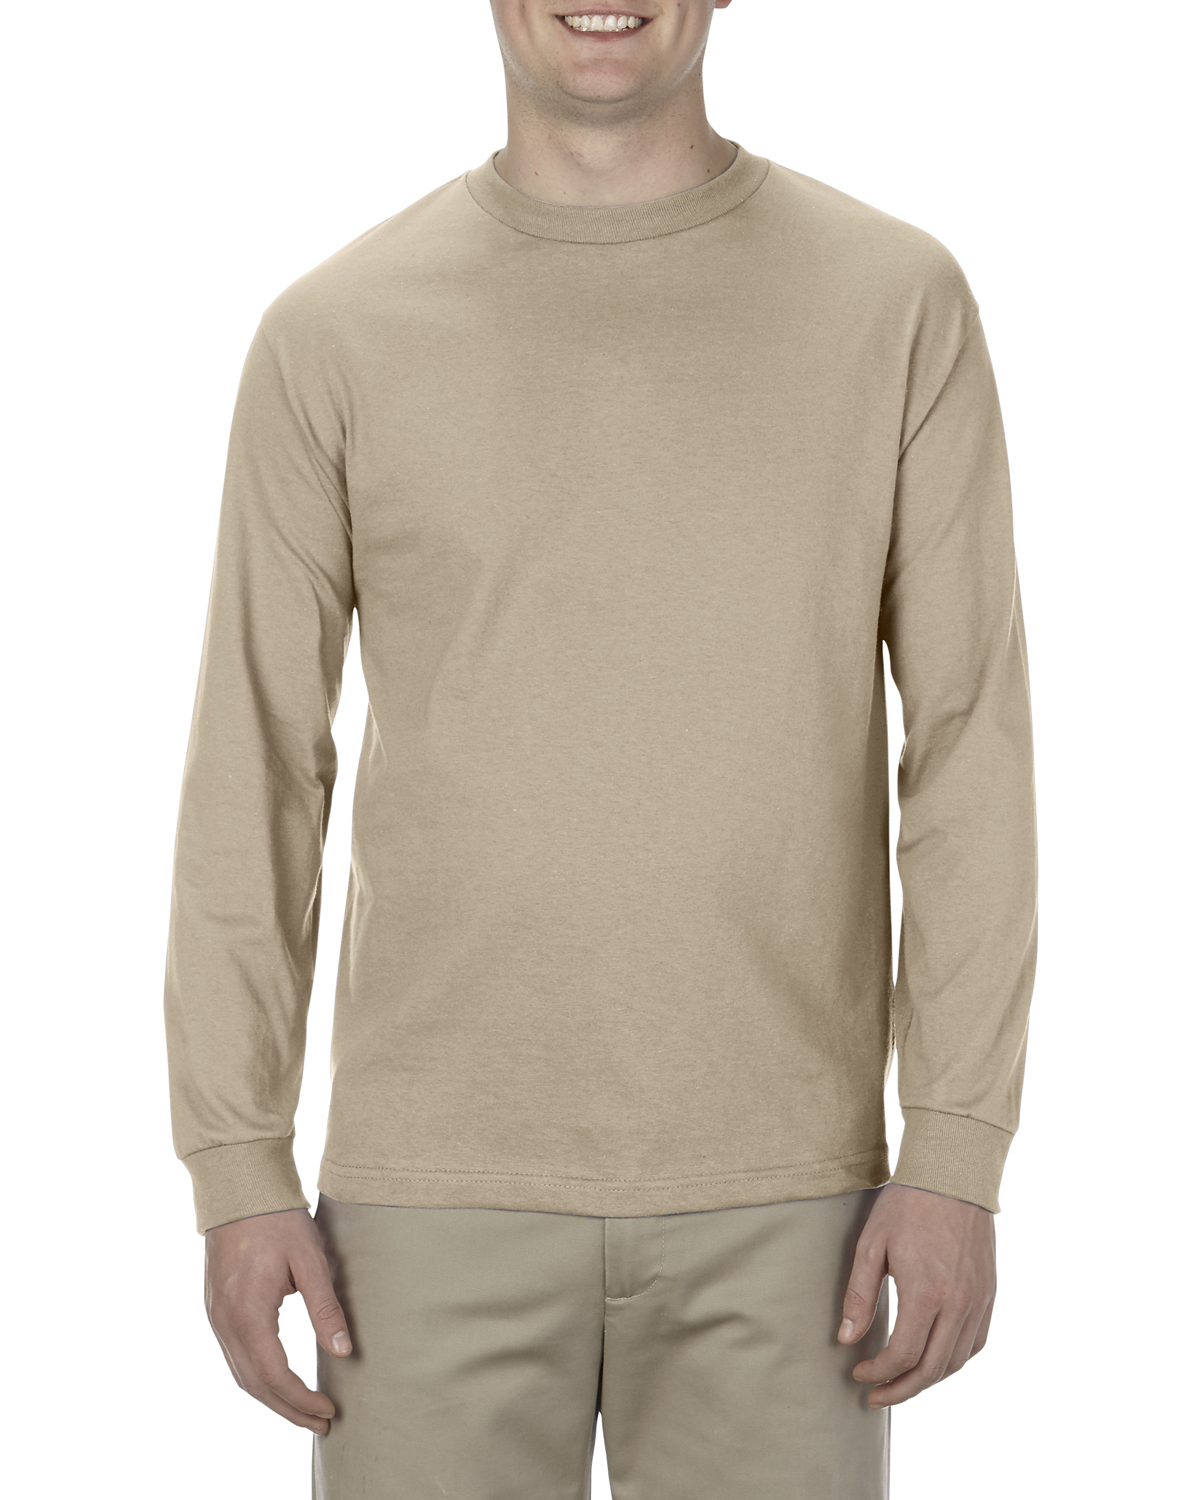 American Apparel AL1304 Adult 6.0 oz., 100% Cotton Long-Sleeve T-Shirt -  Sand - L